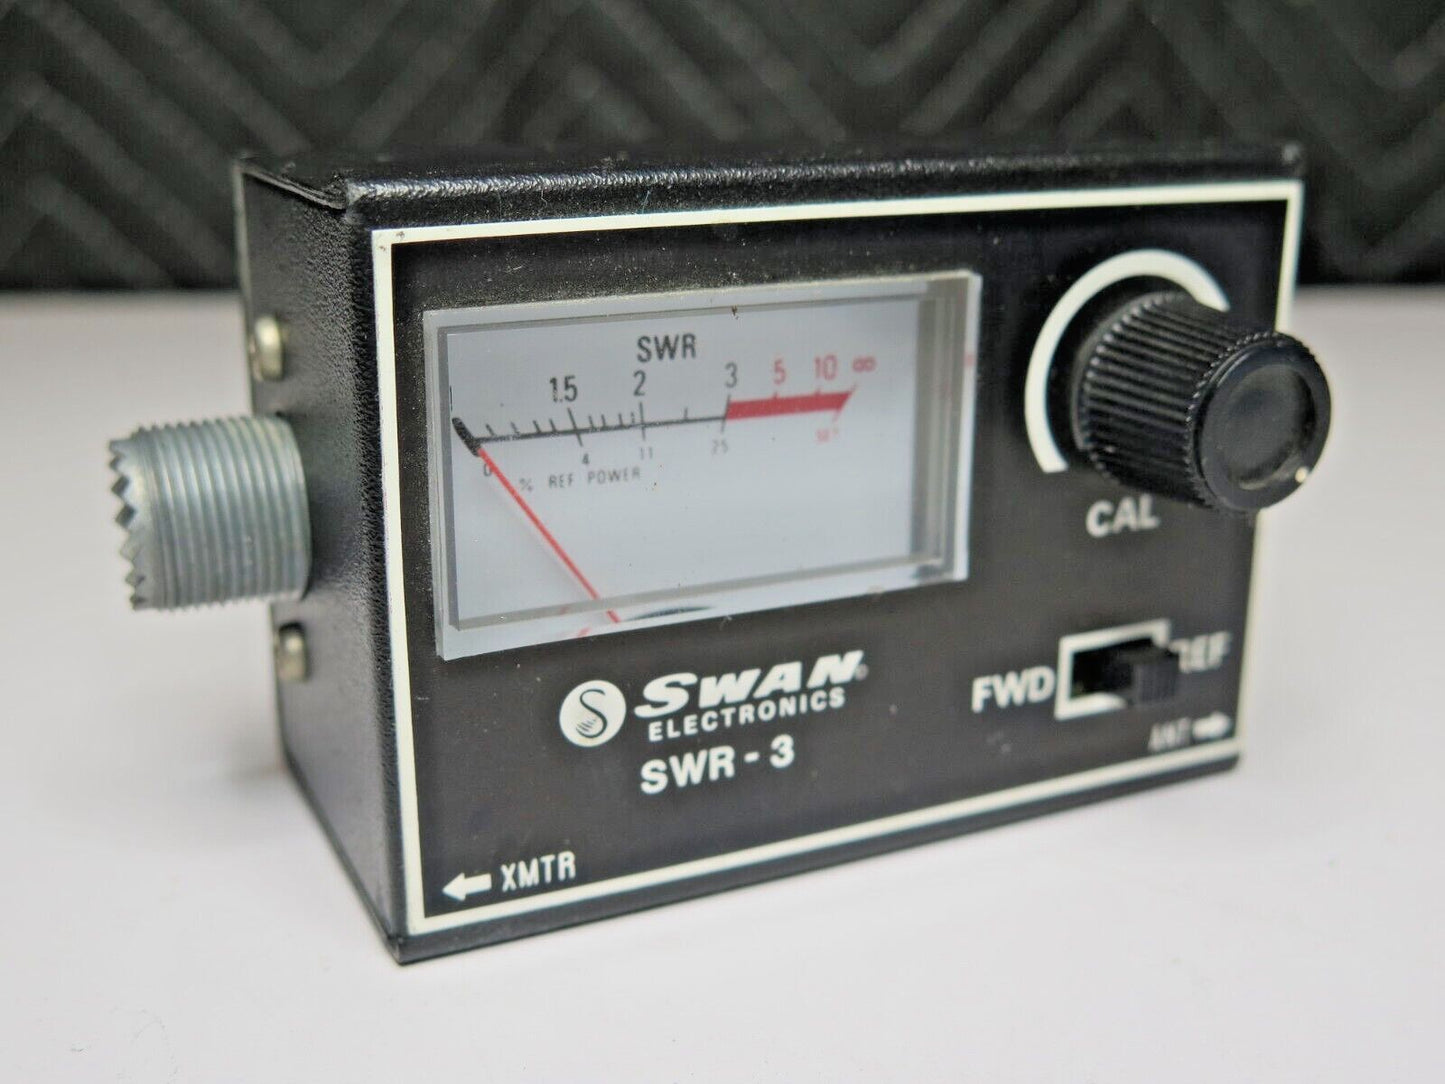 SWAN SWR-3 SWR Meter for HAM / Amateur Radio